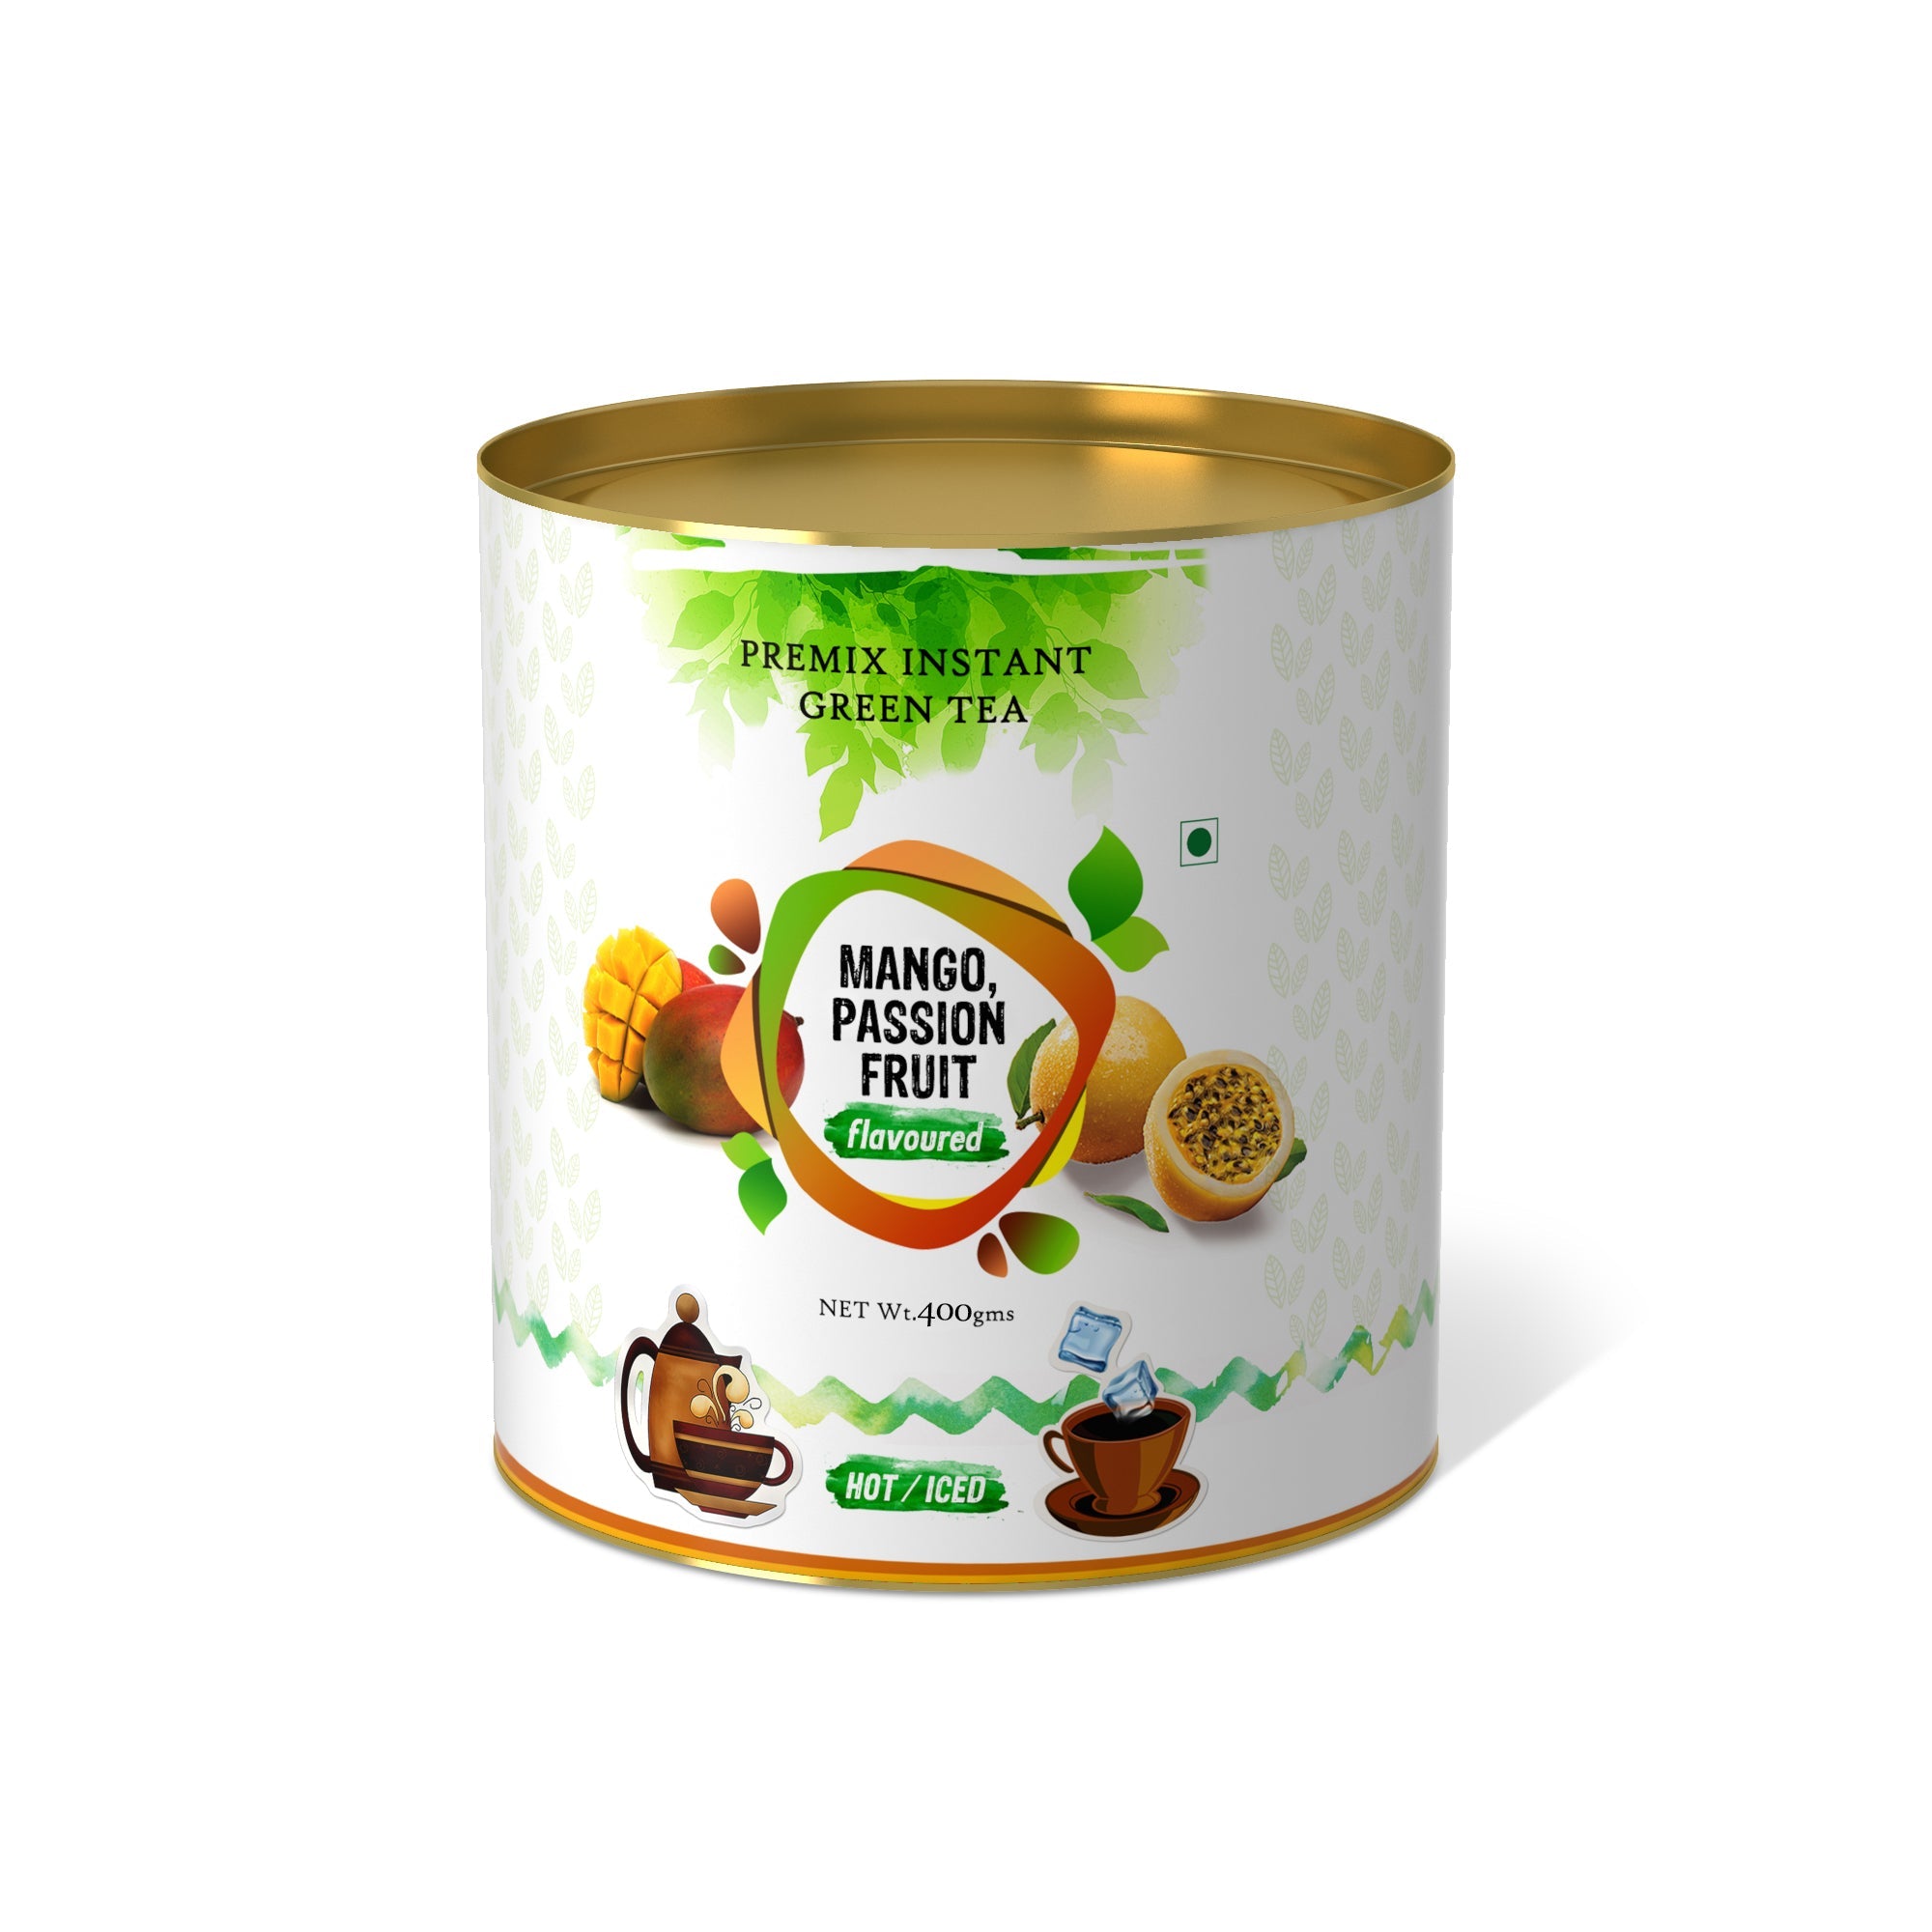 Mango Passion Fruit Flavored Instant Green Tea - 250 gms